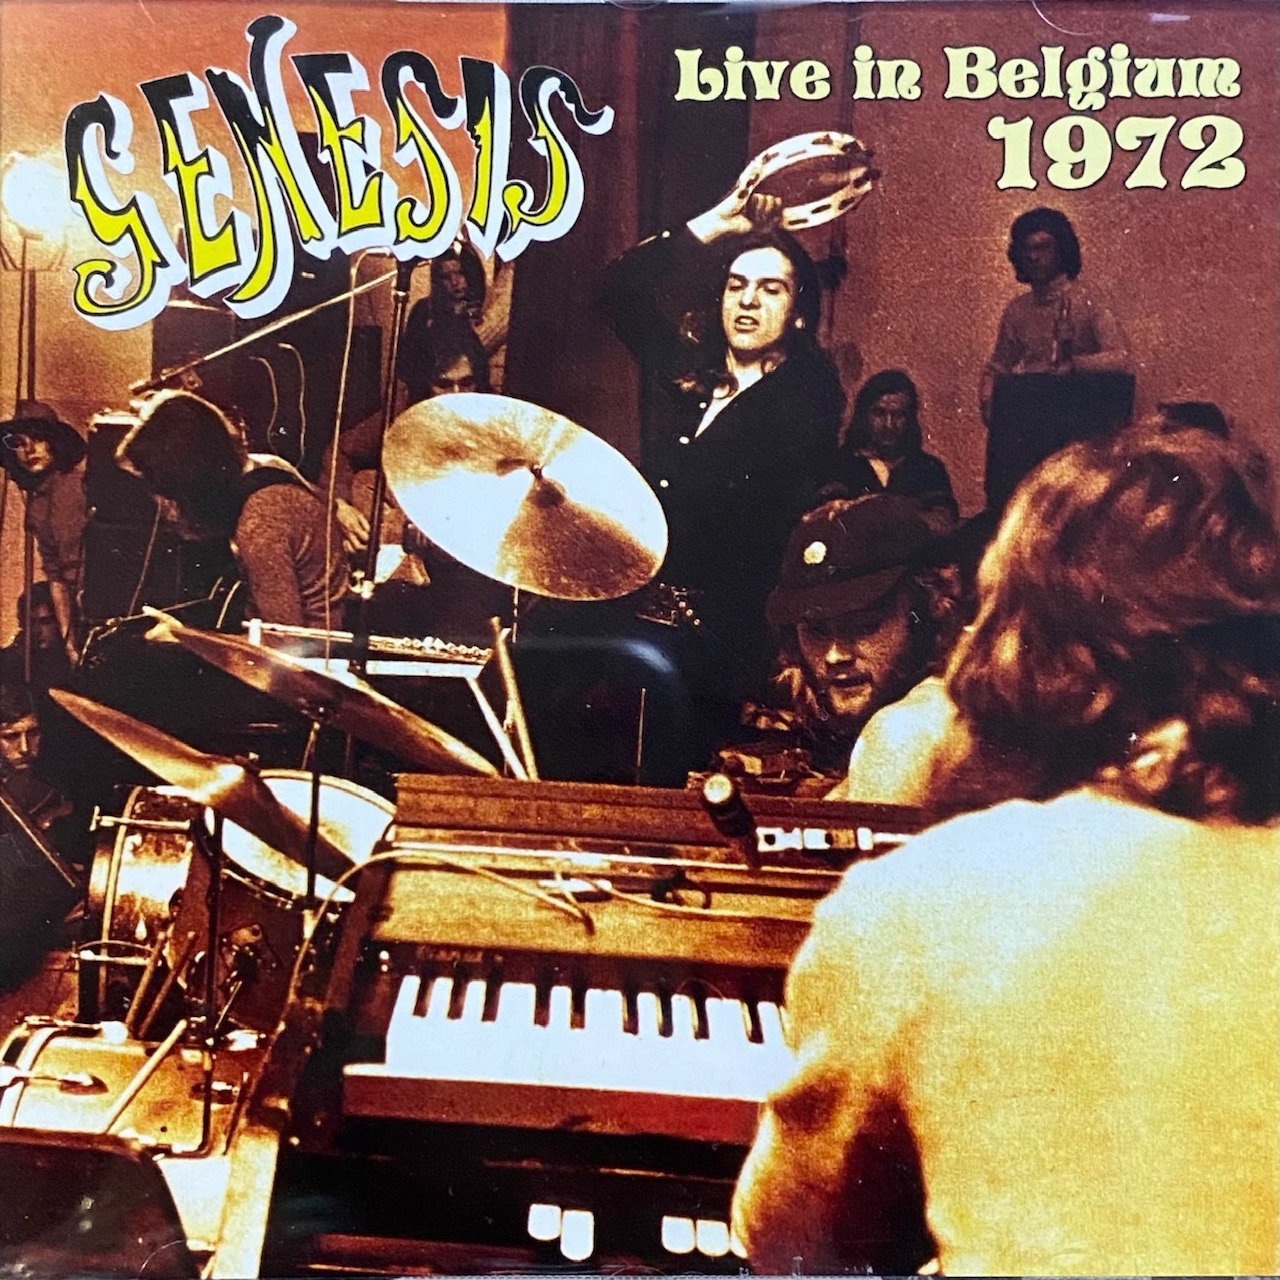 GENESIS - LIVE IN BELGIUM 1972